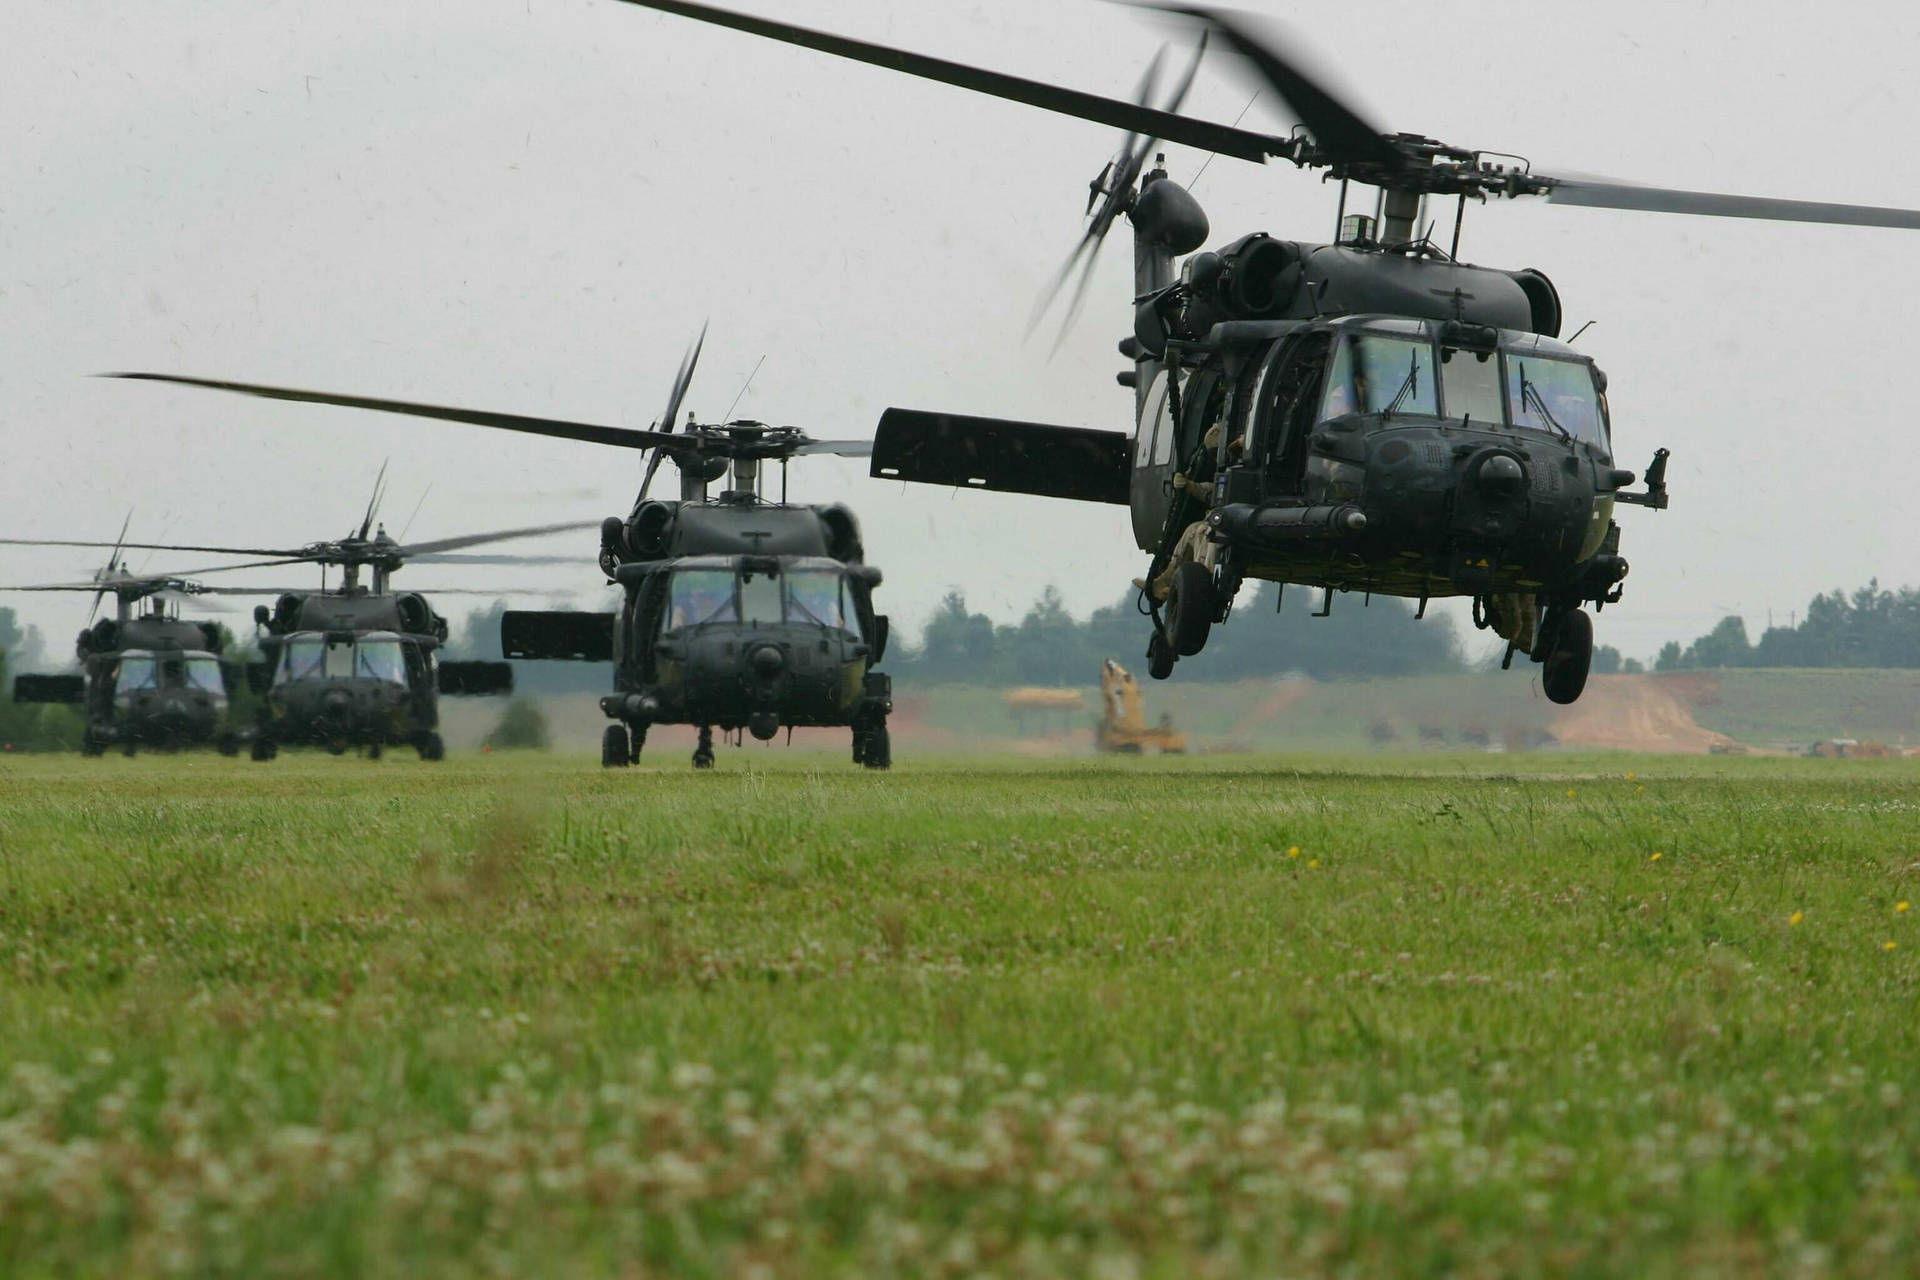 Ungrupo De Helicópteros Negros Volando En Formación Fondo de pantalla